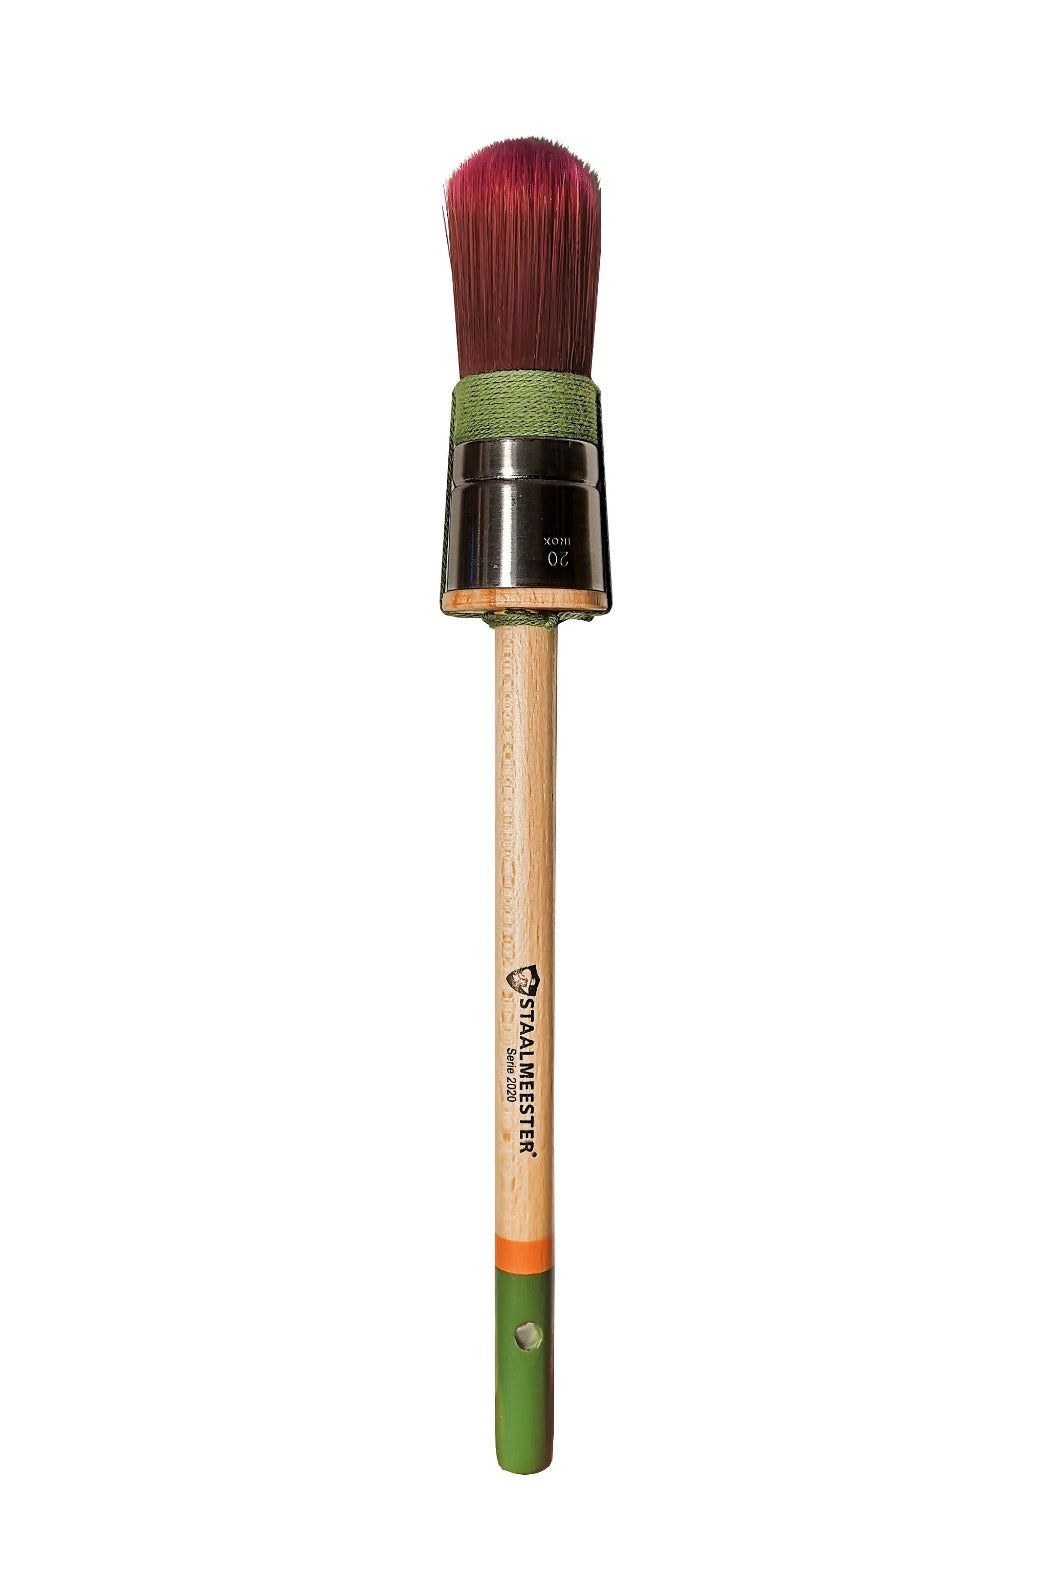 Round Paintbrush 2020 - Staalmeester - No 12, 14, 16, 18, 20